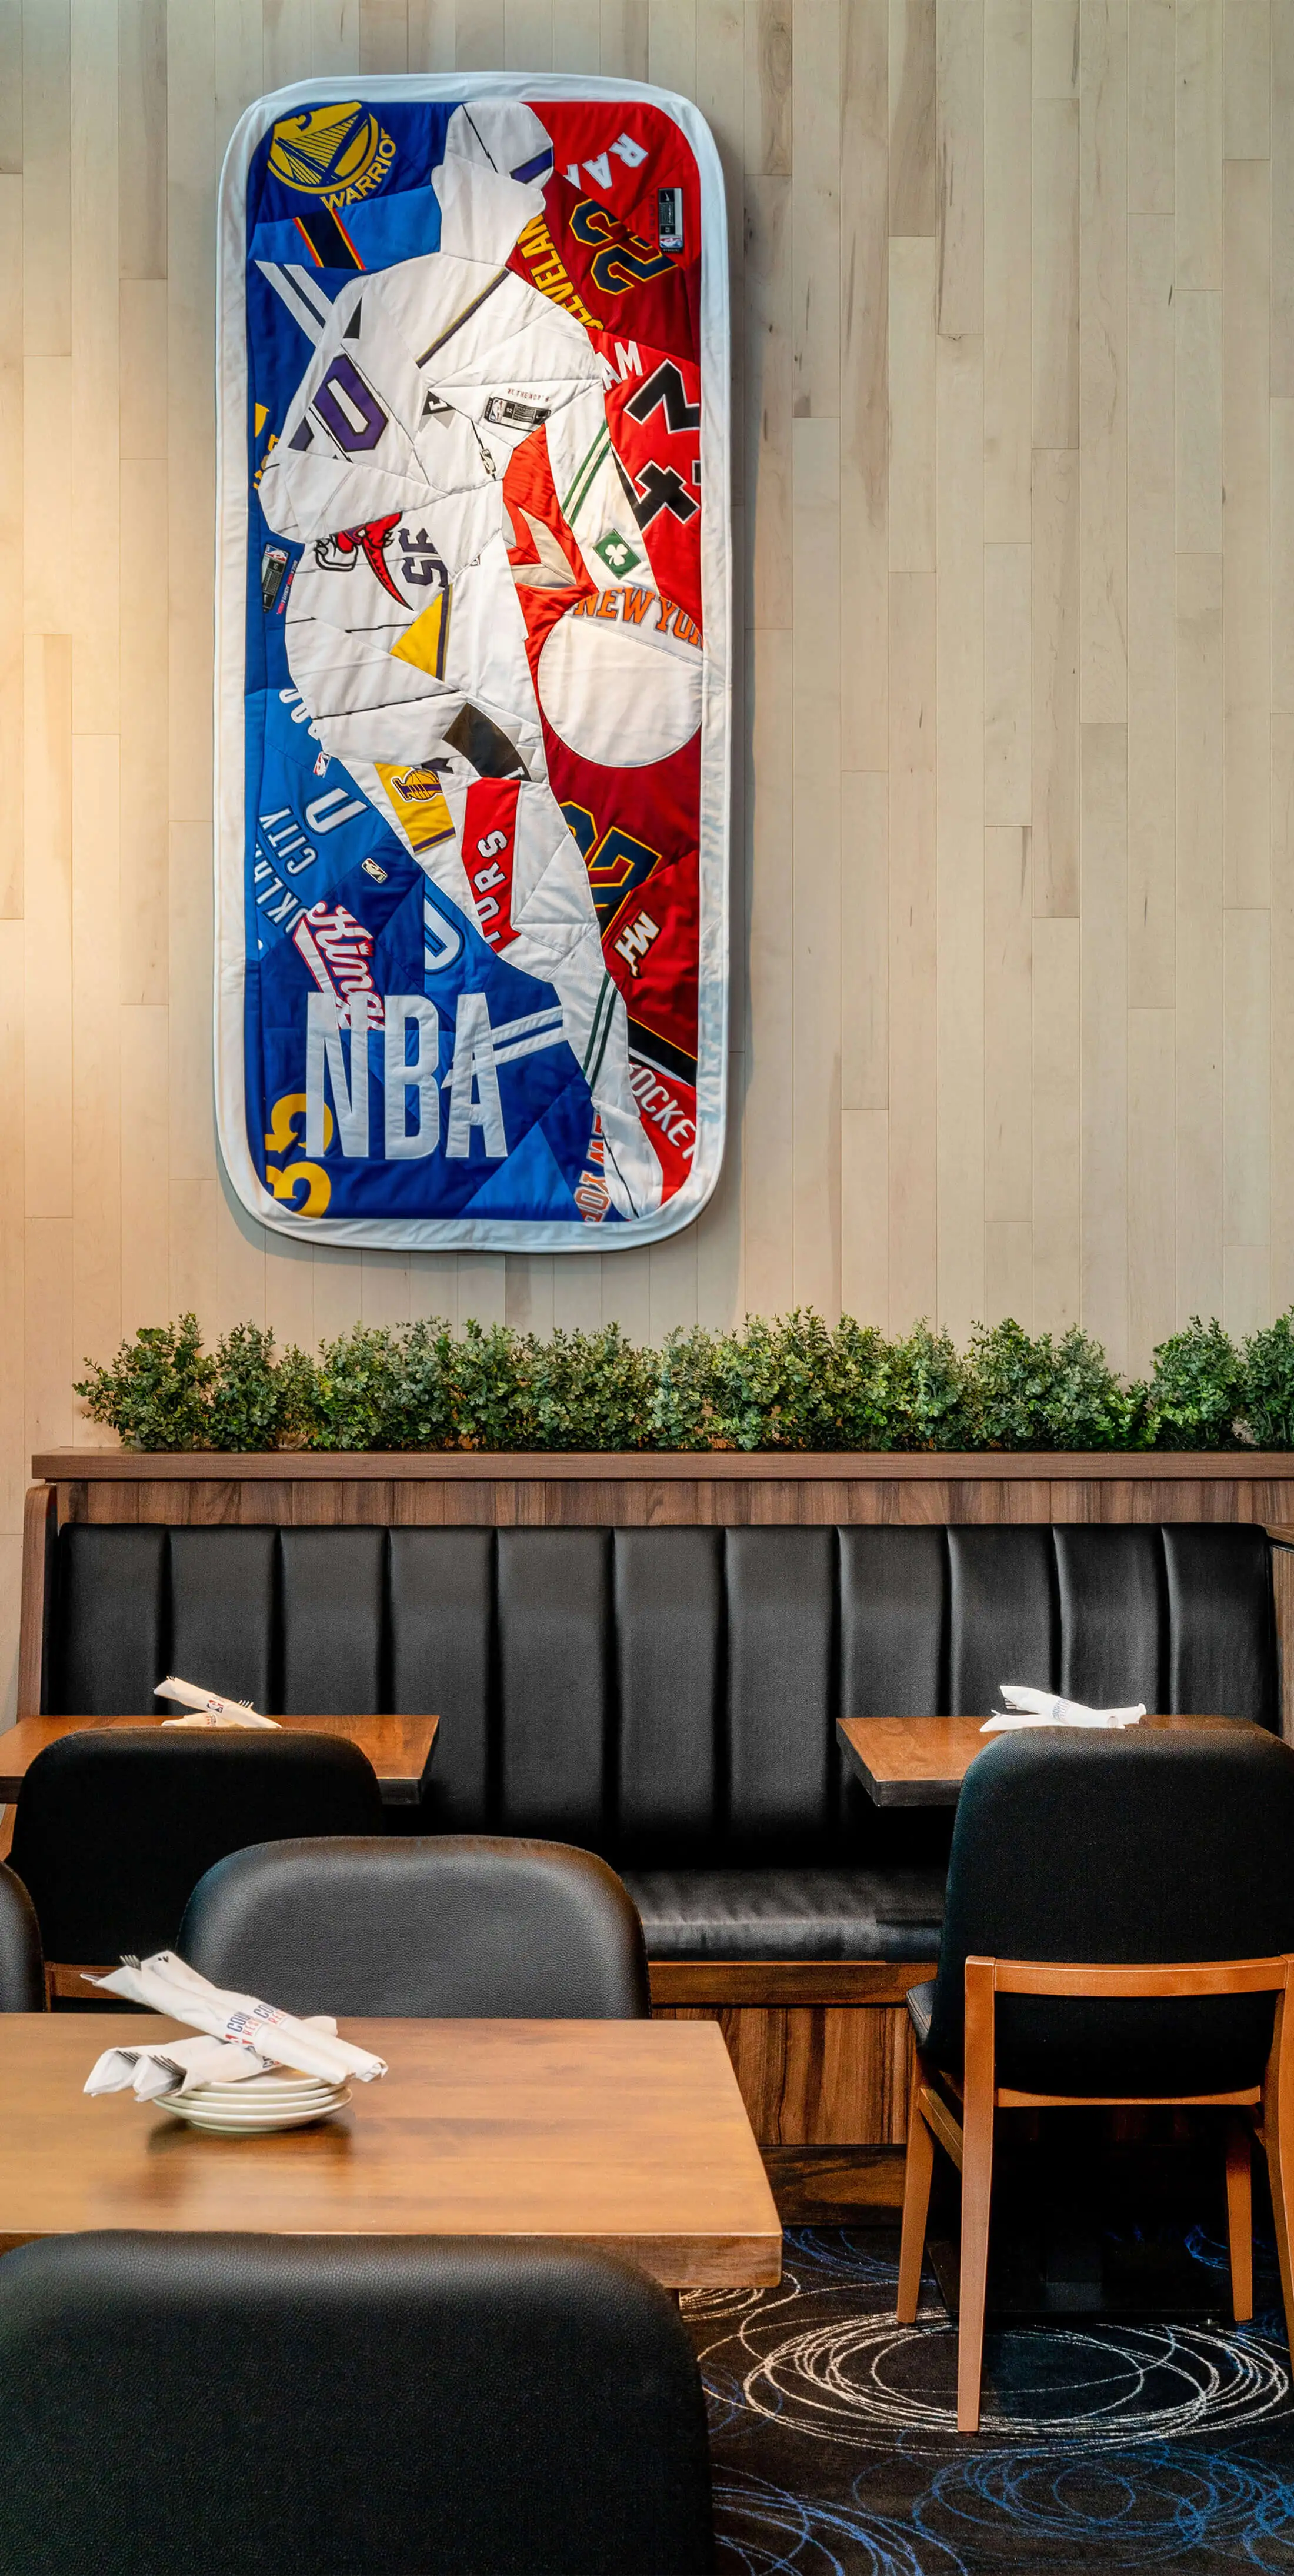 About NBA Courtside Restaurant Toronto Interior